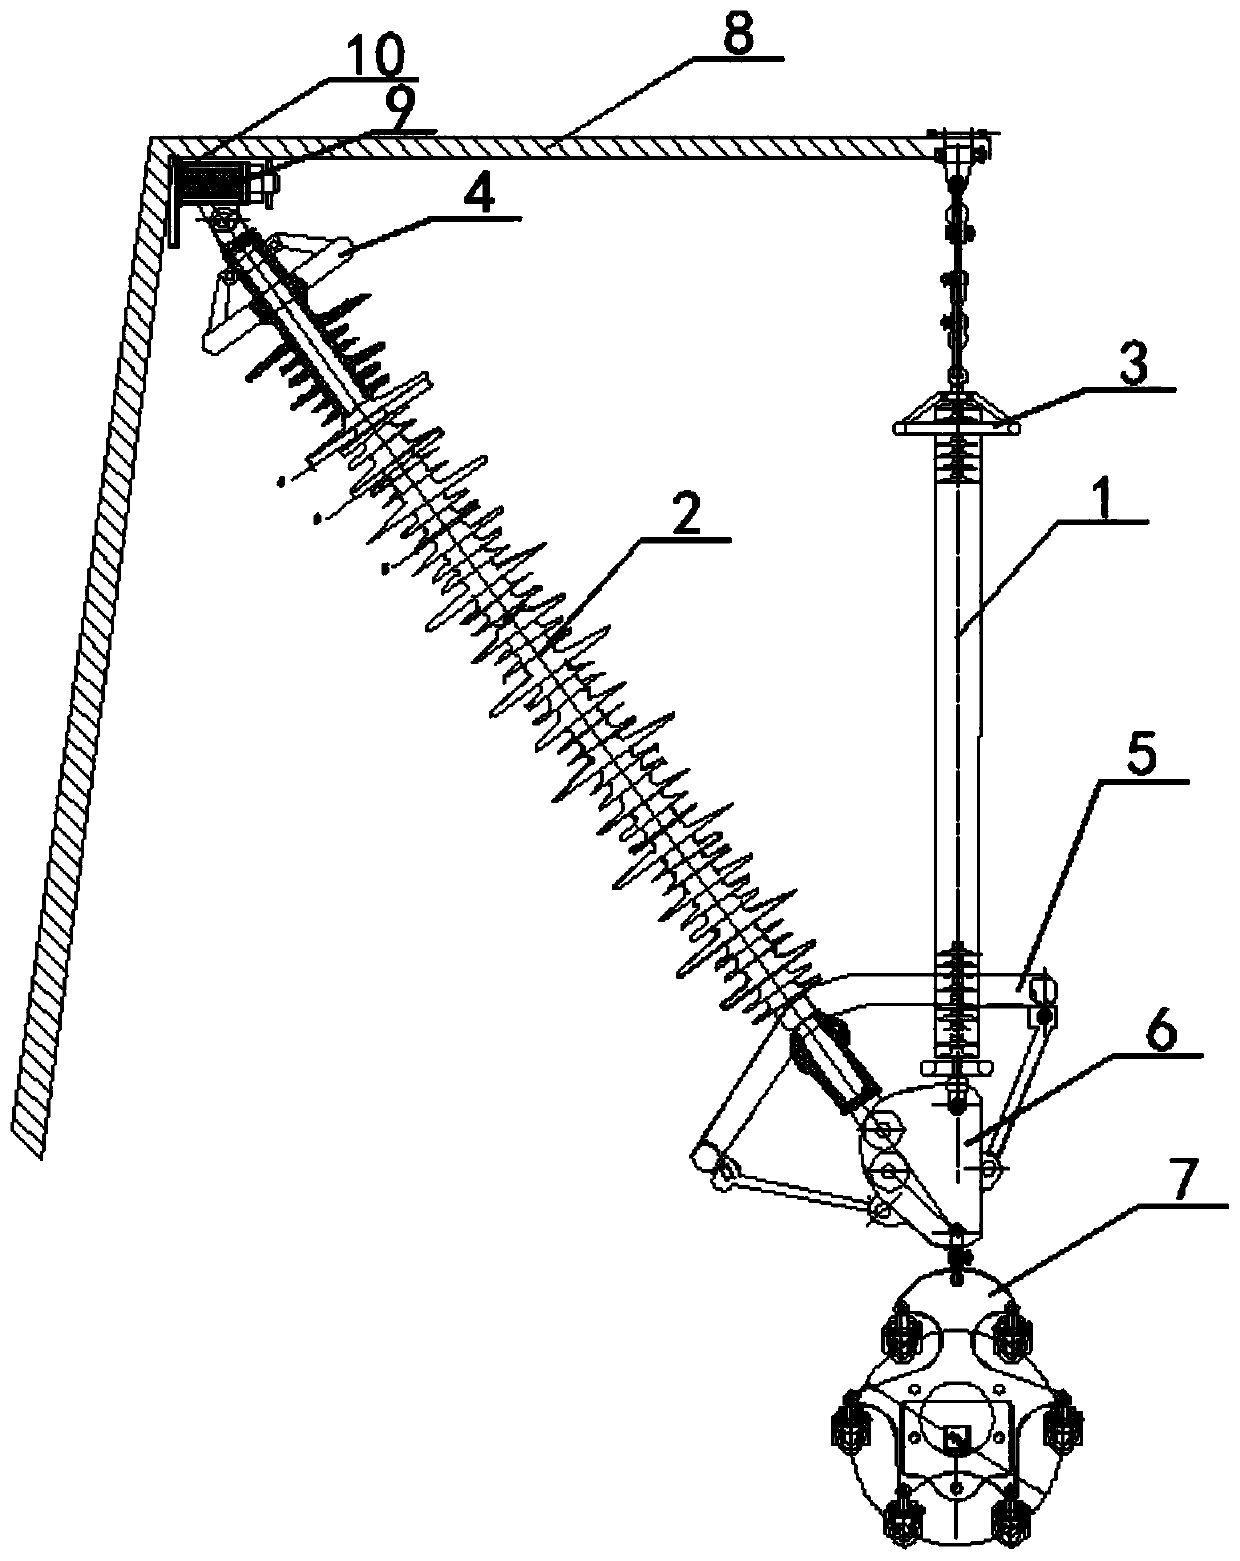 Half-V-shaped suspension string for preventing windage yaw